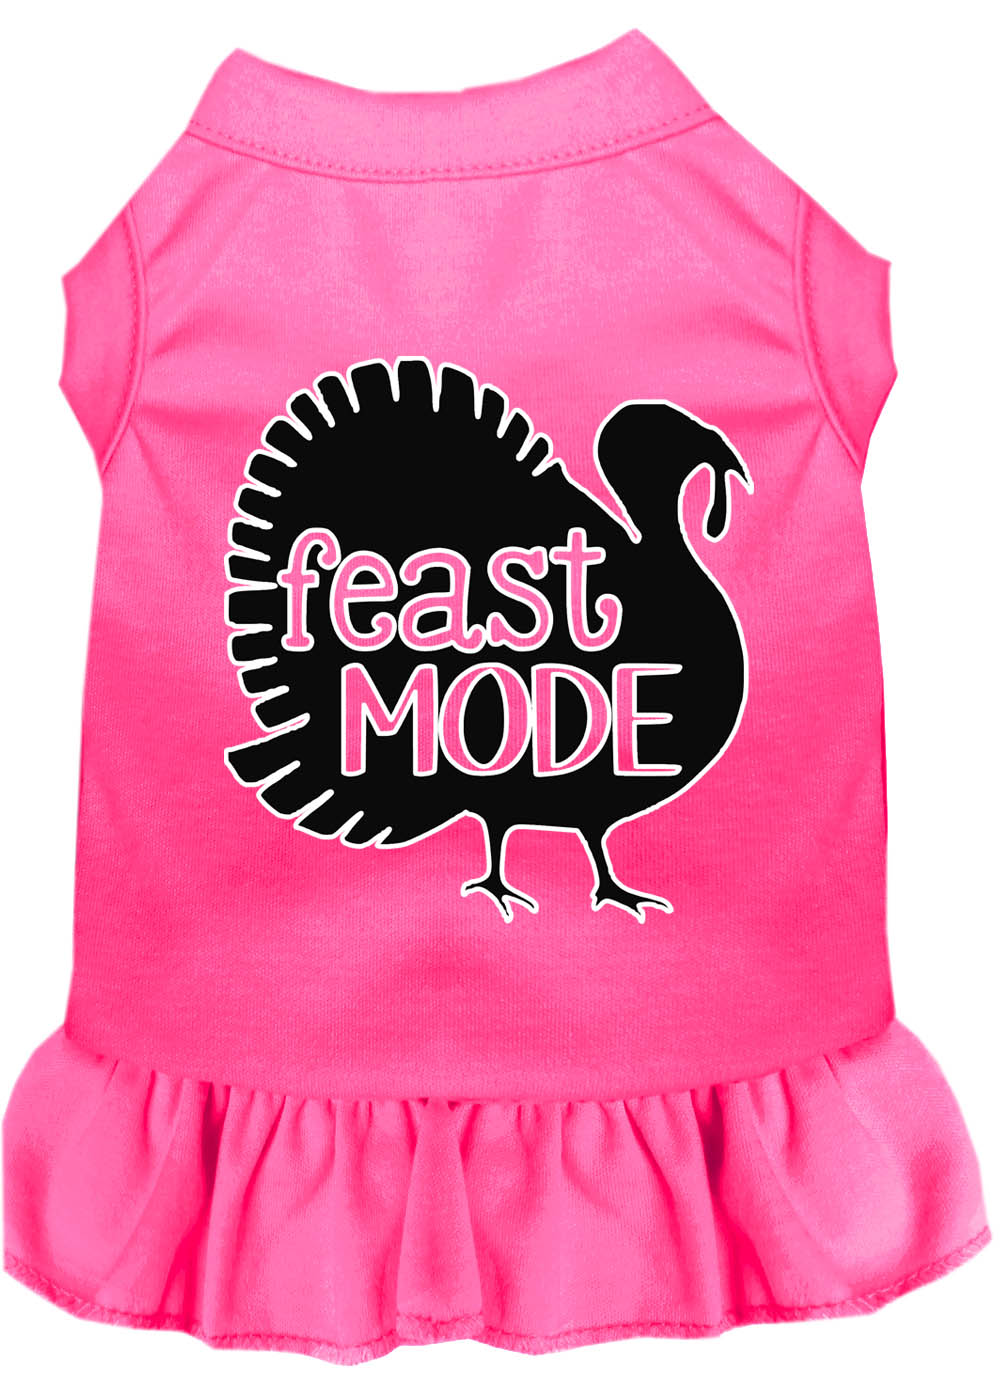 Feast Mode Screen Print Dog Dress Bright Pink Med